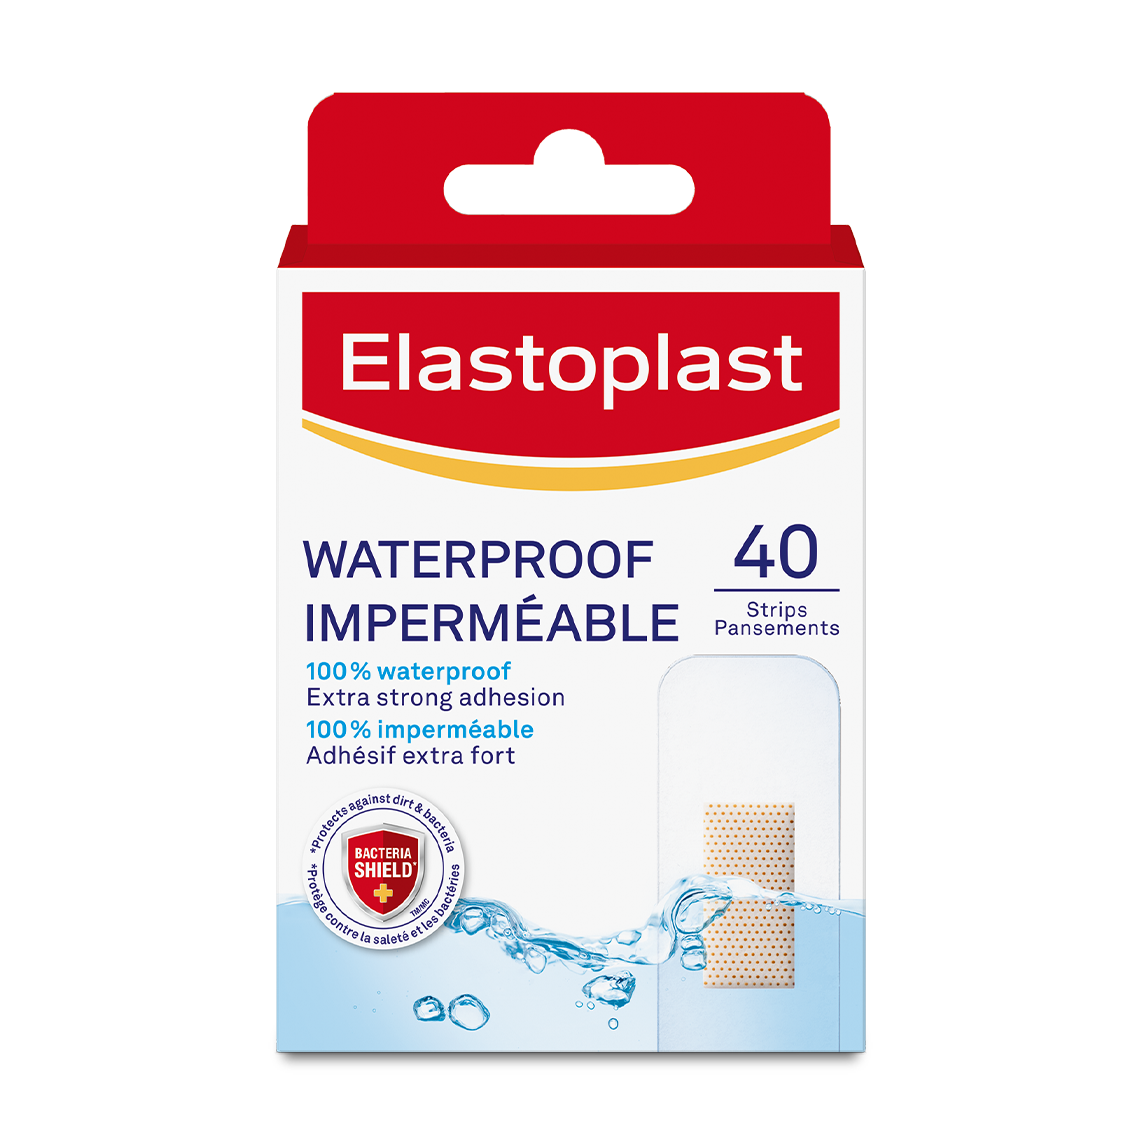 EP_Rebrand_Product_1380x1140_Waterproof_40Strips